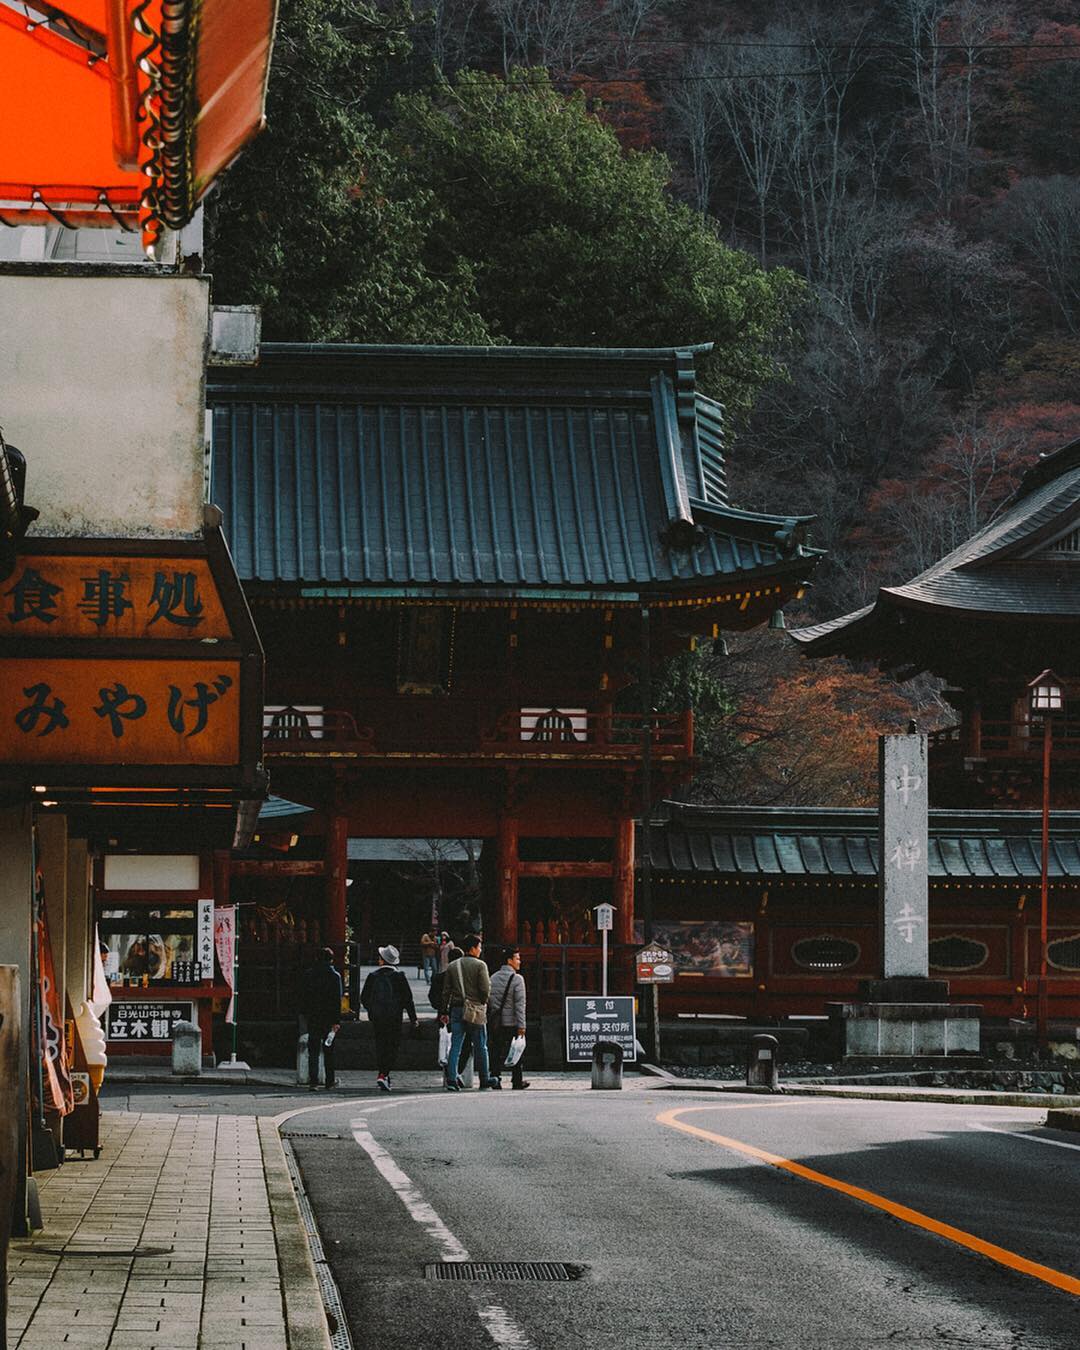 An old street corner of Nikko.